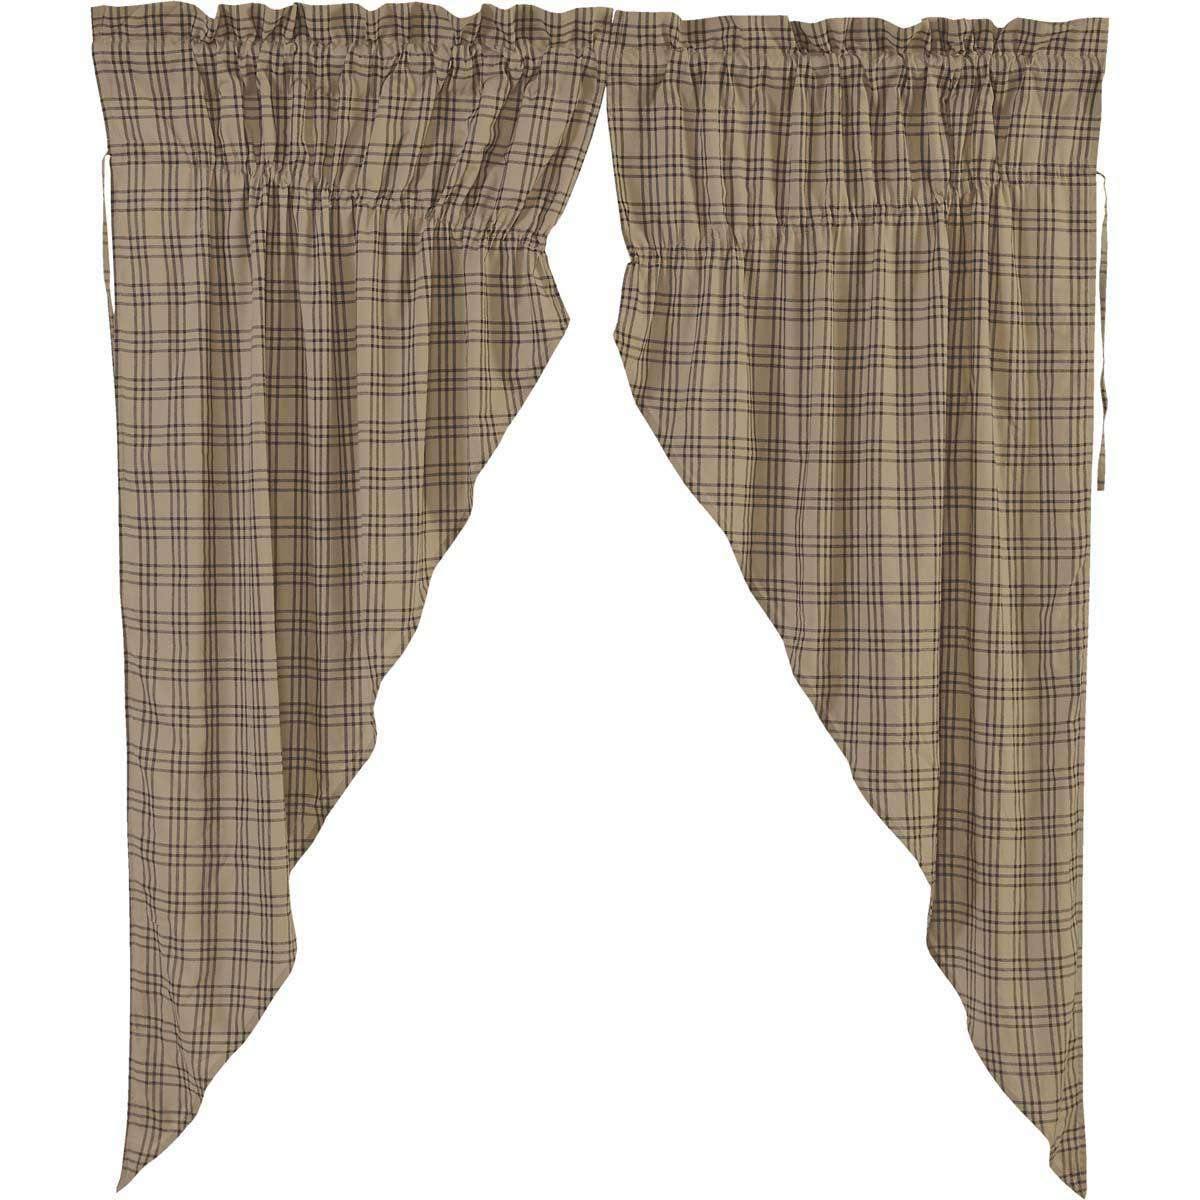 Sawyer Mill Charcoal Plaid Prairie Short Panel Curtain Set of 2 63x36x18 - The Fox Decor